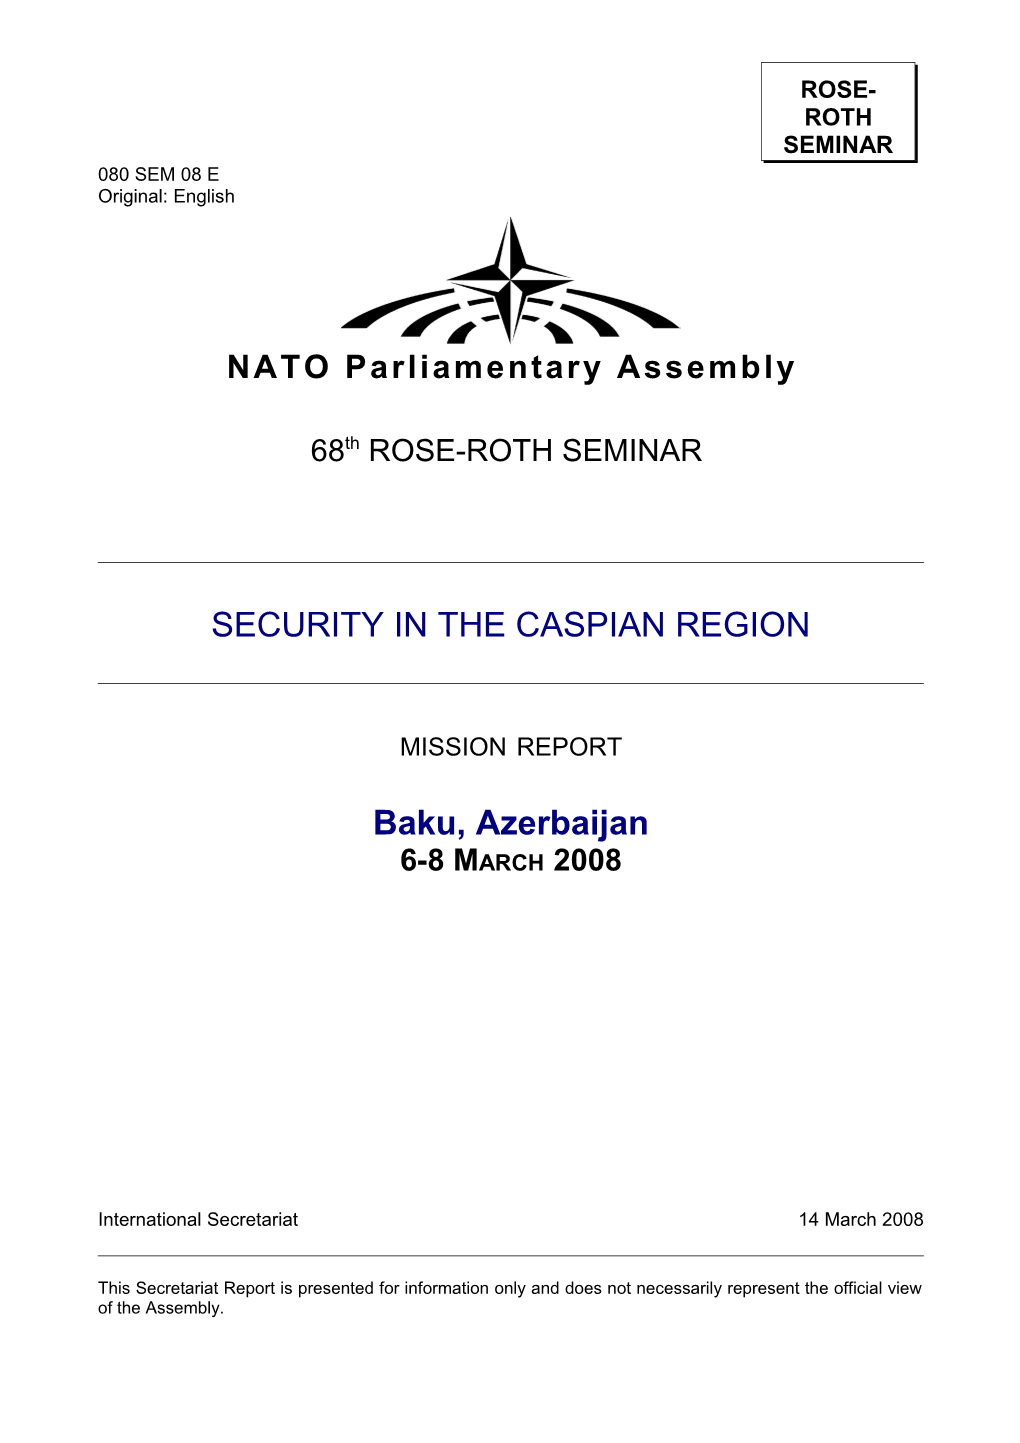 Rose-Roth Seminar Security in the Caspian Region